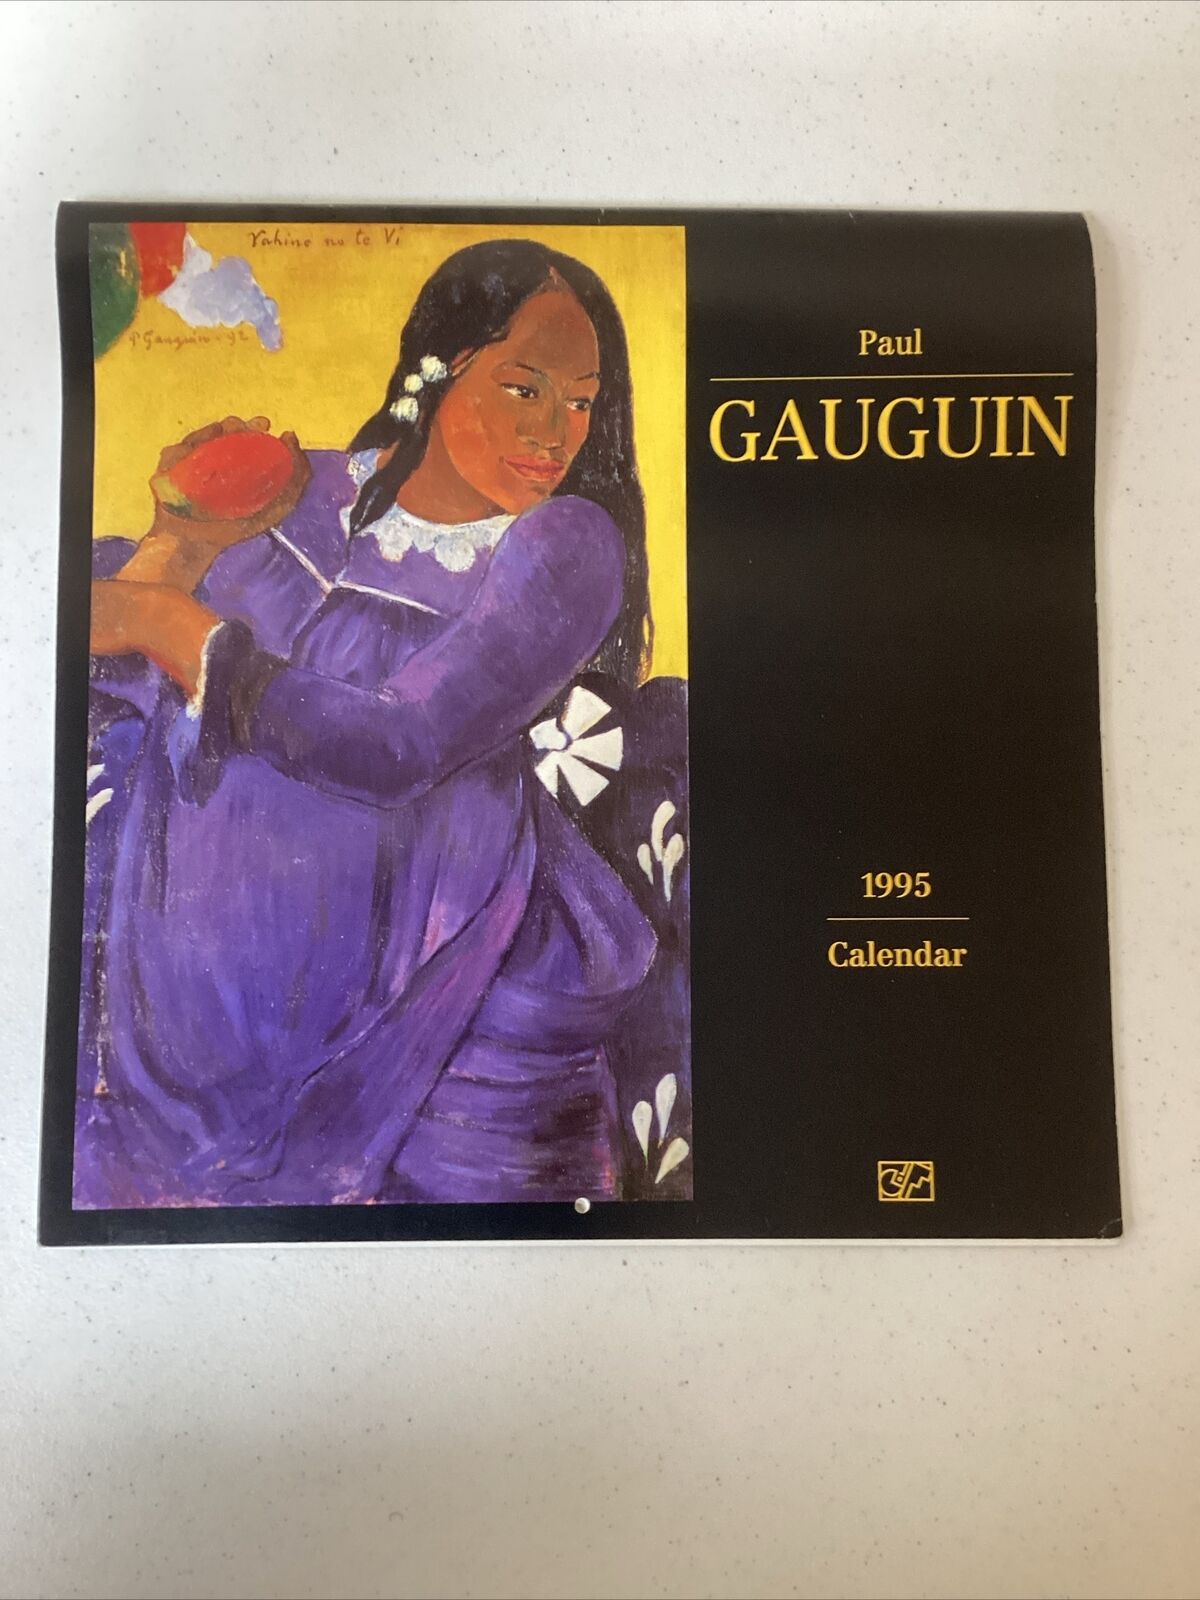 Paul Gauguin 1995 Art Calendar. A Rare Find